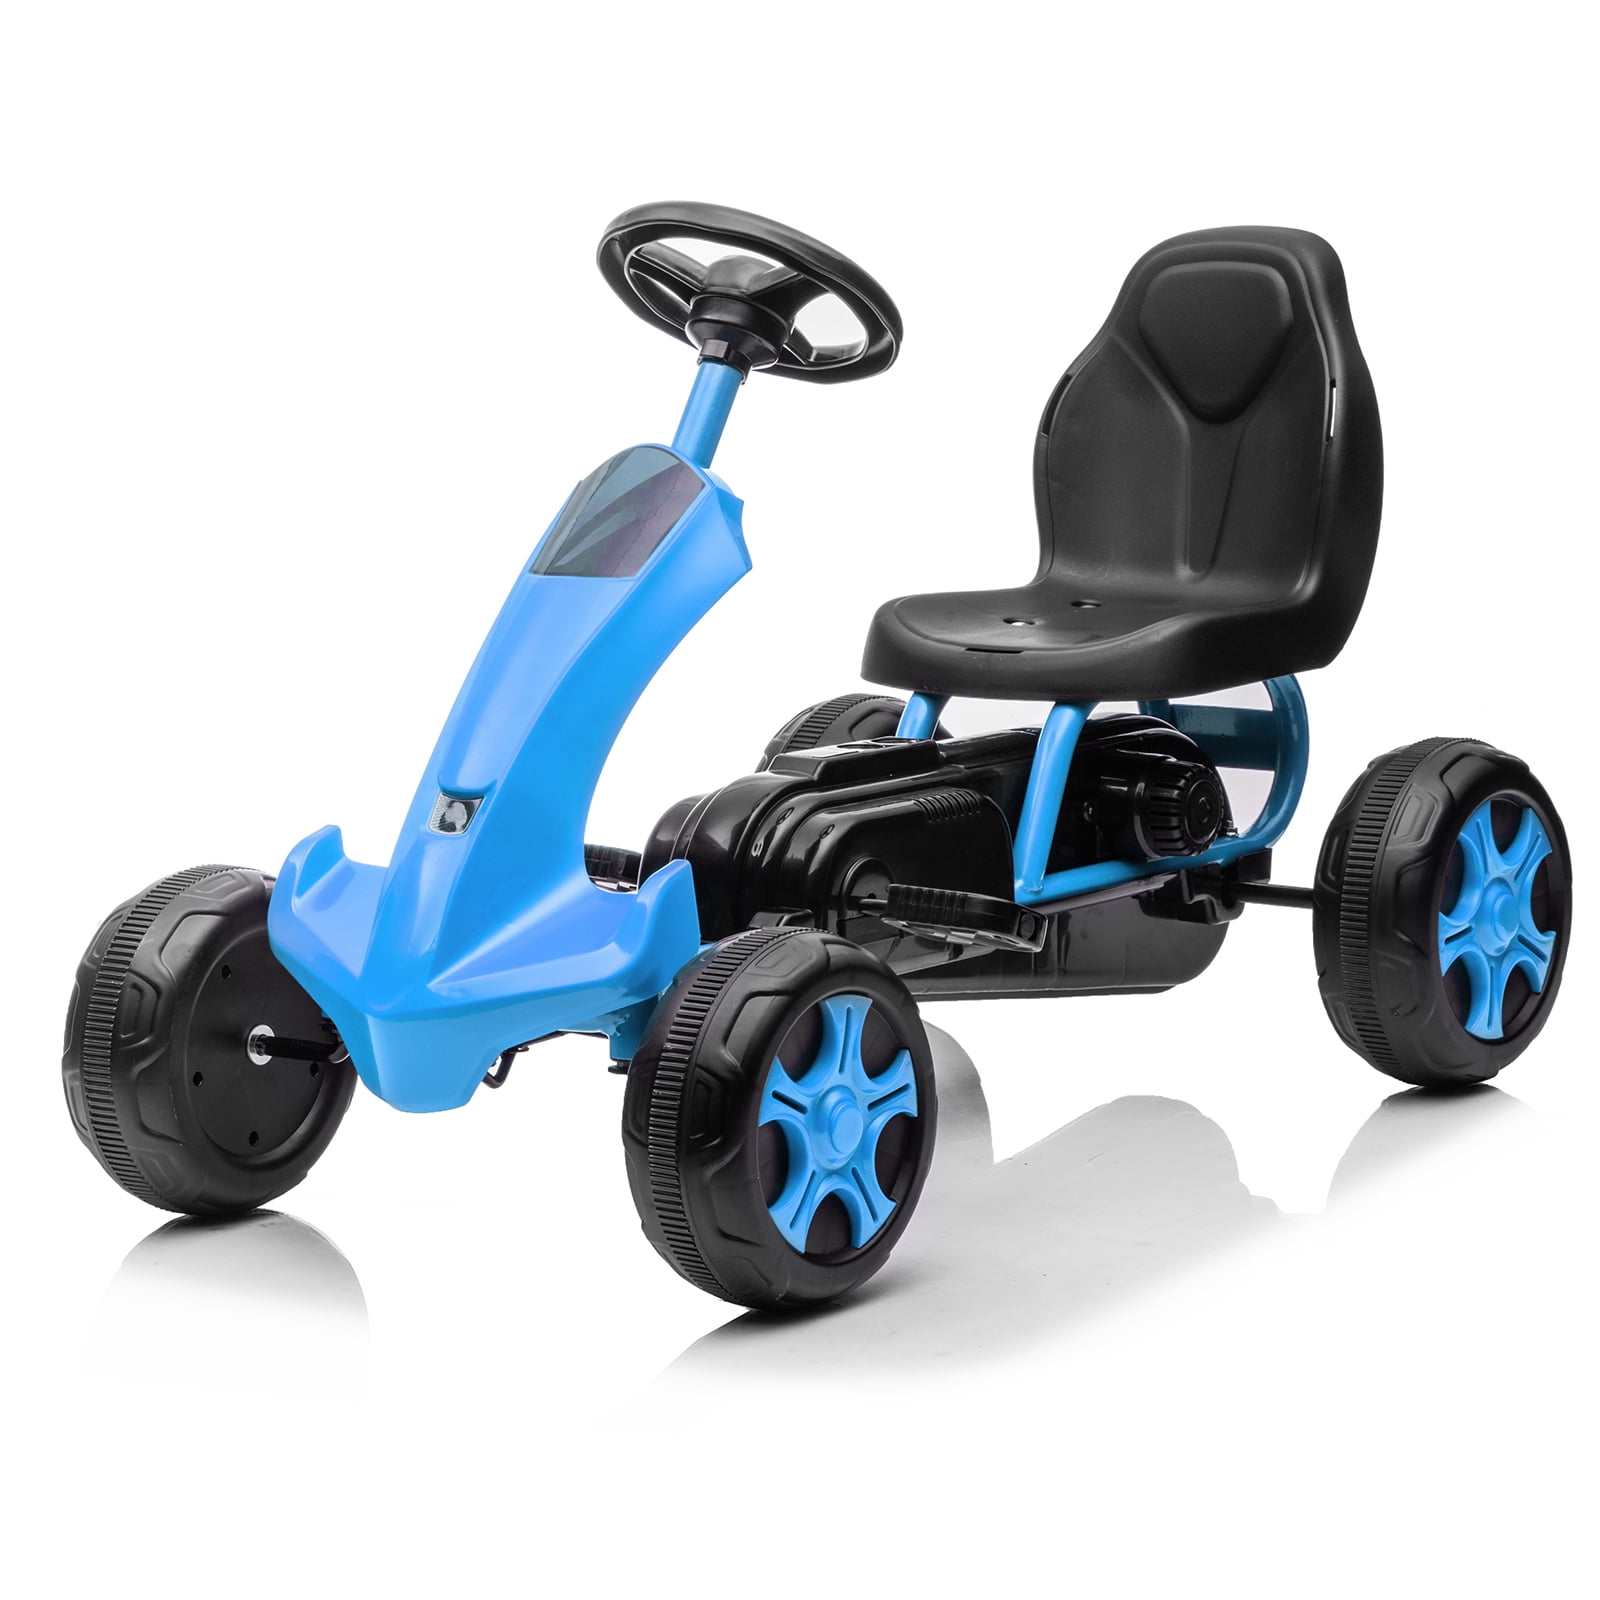 Pedal Go Karting Cart Kart Car Toy for Toddler Children Boys and Girls Blue 